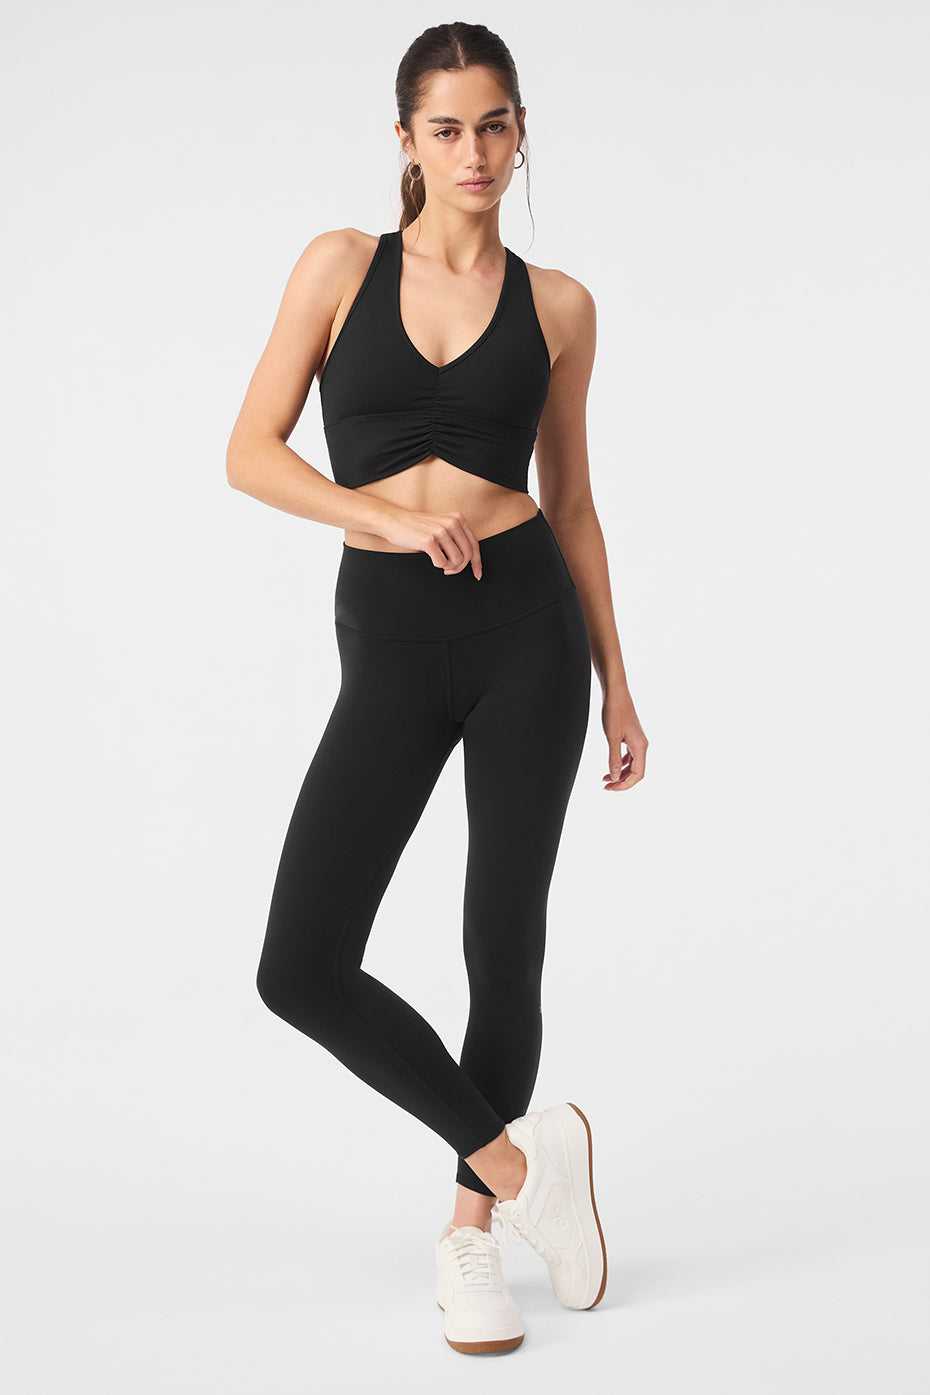 Alo Yoga® | 7/8 High-Waist Airbrush Legging in Black, Size: Large